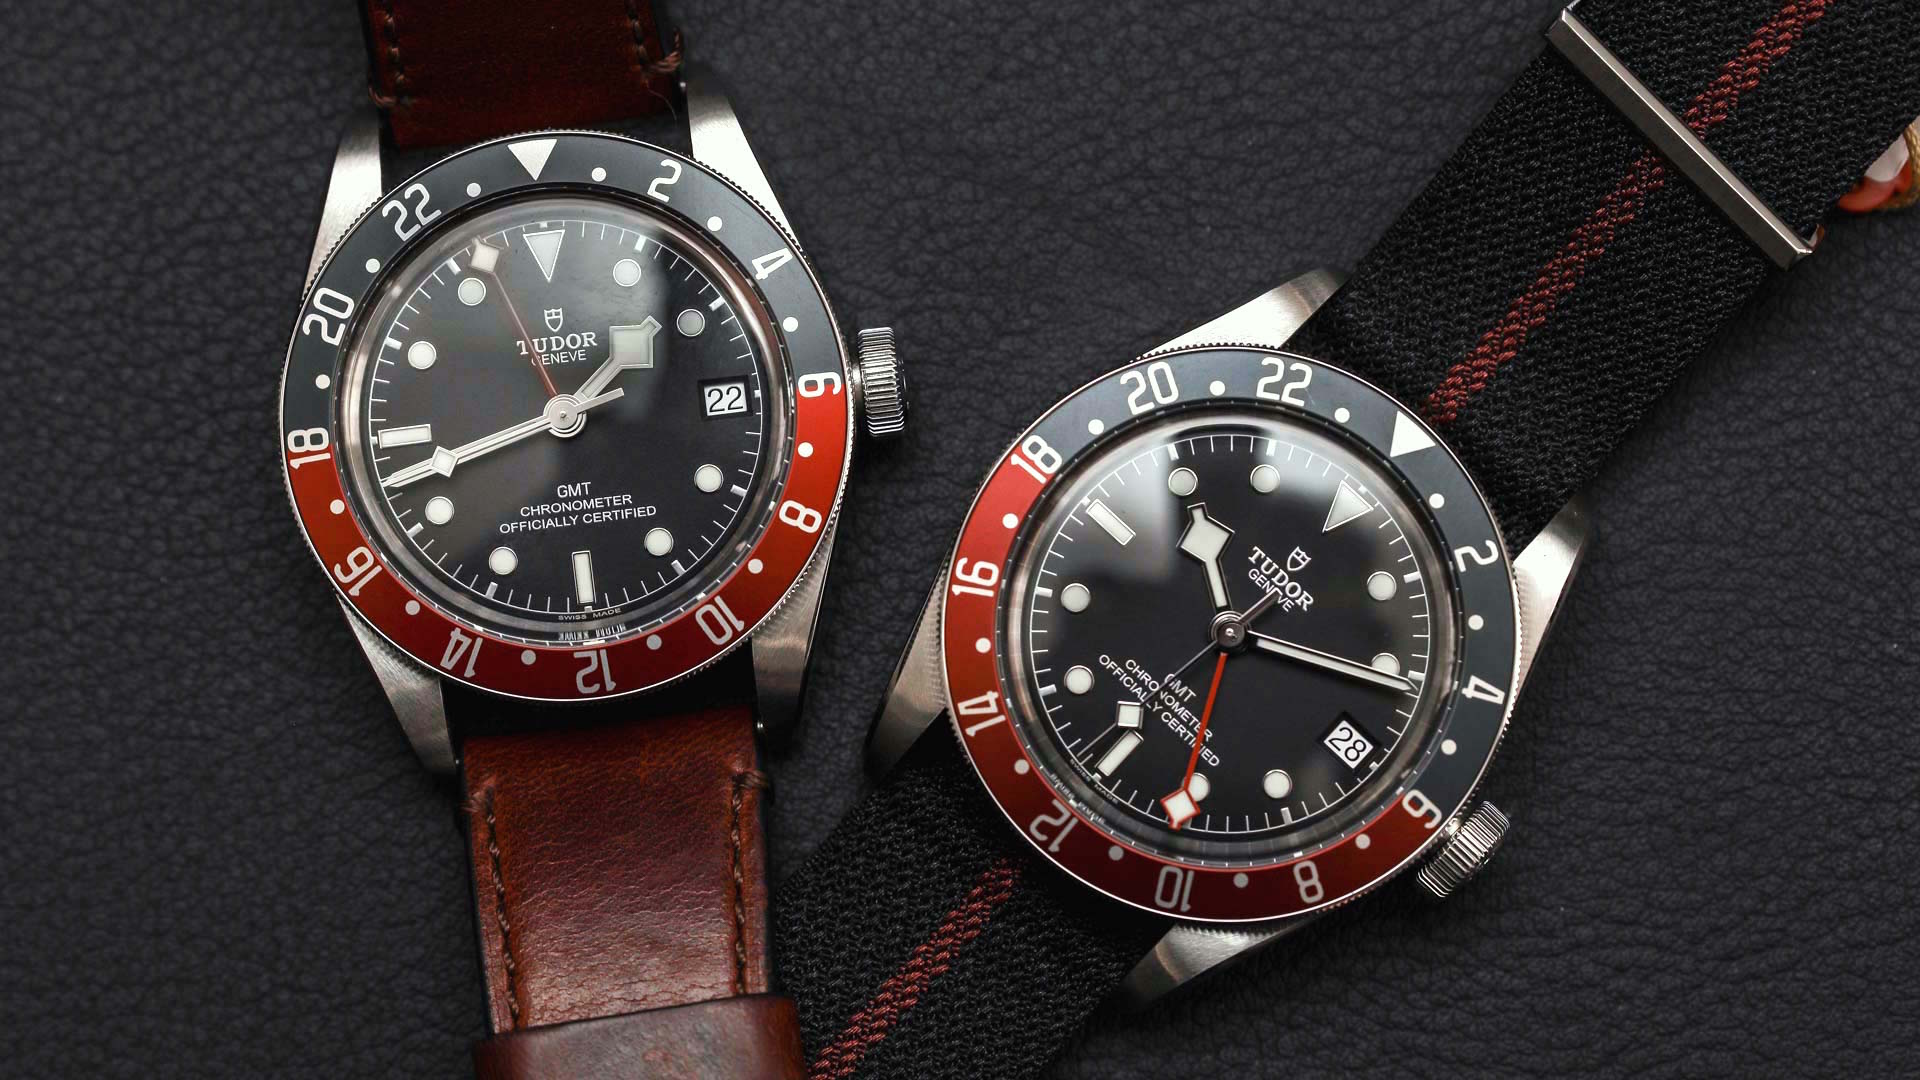 Tudor Black Bay GMT Watch Hands-On